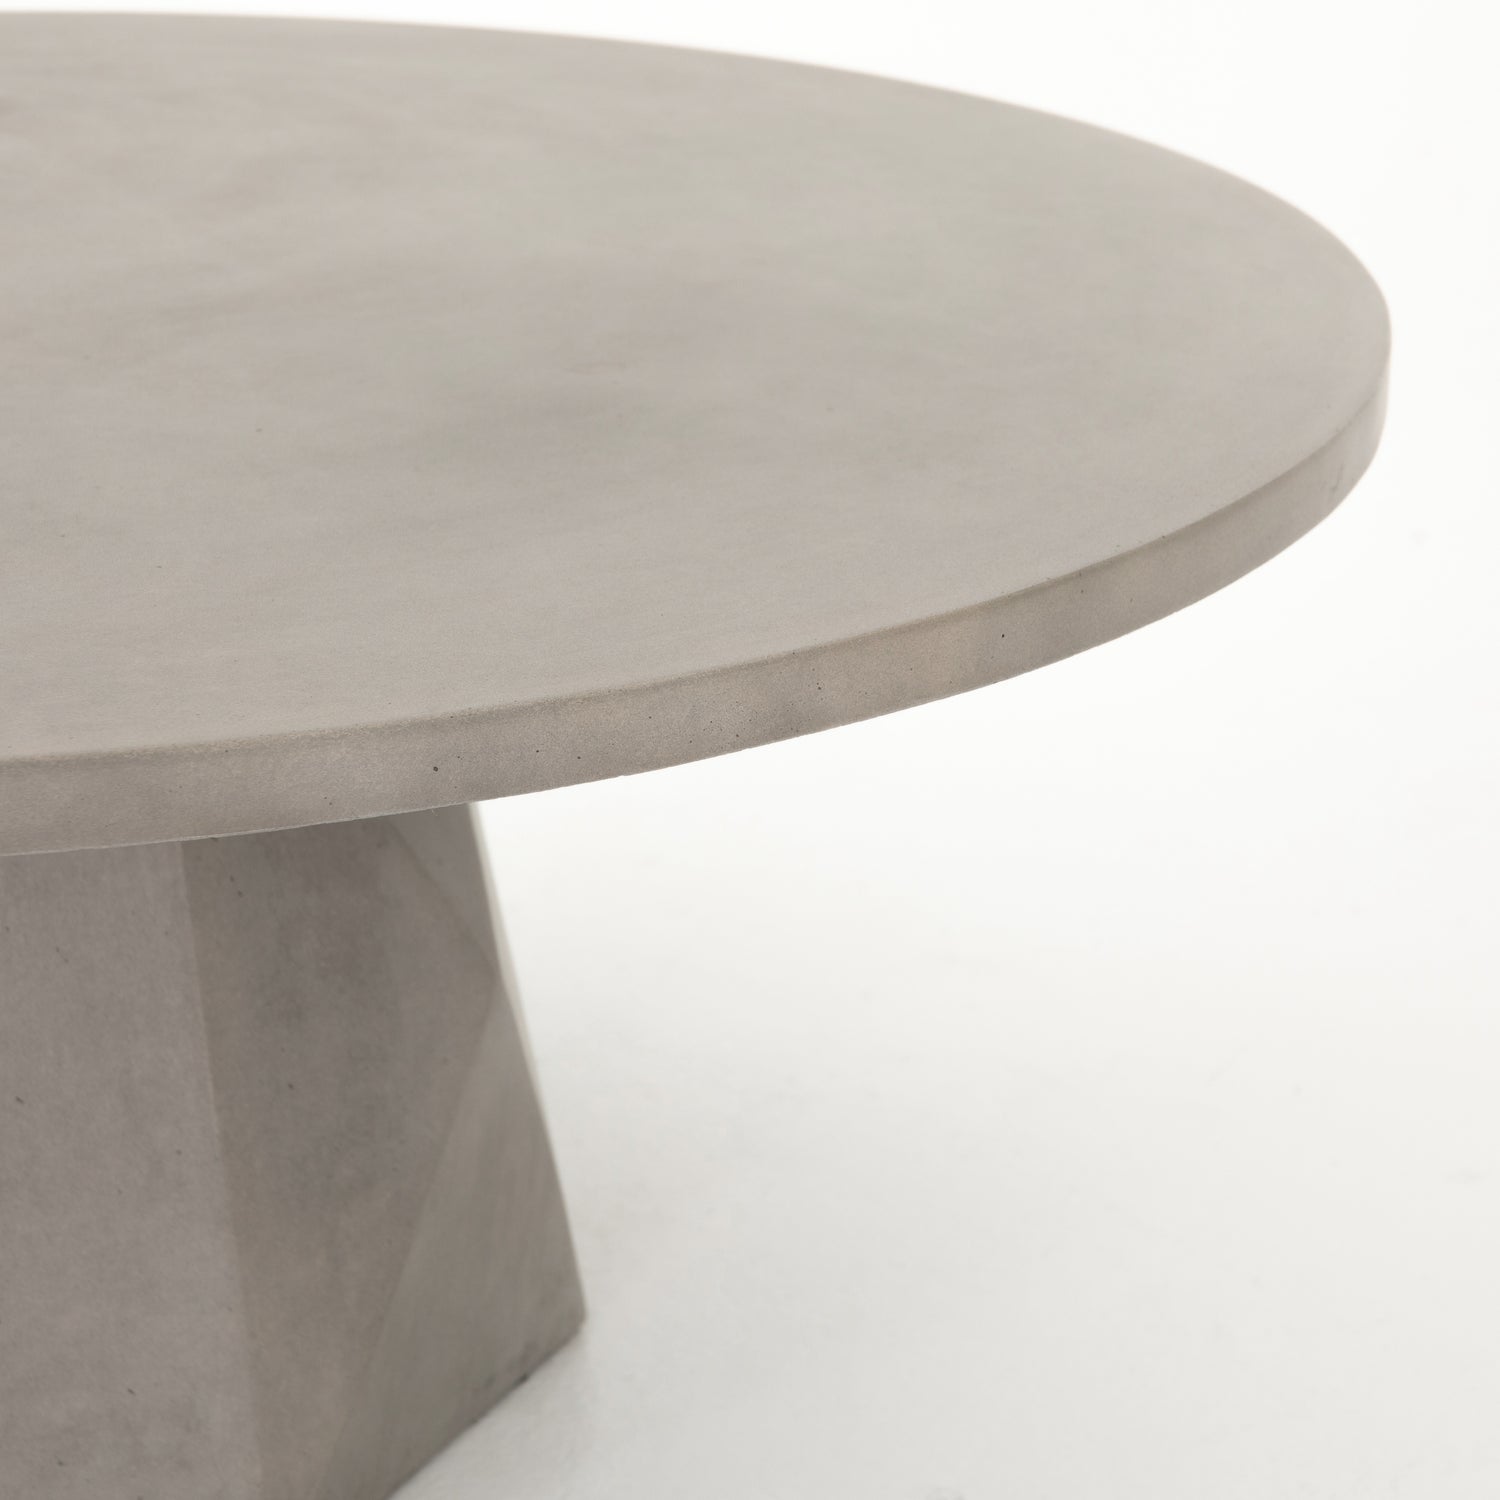 Grey Concrete | Bowman Outdoor Coffee Table | Valley Ridge Furniture